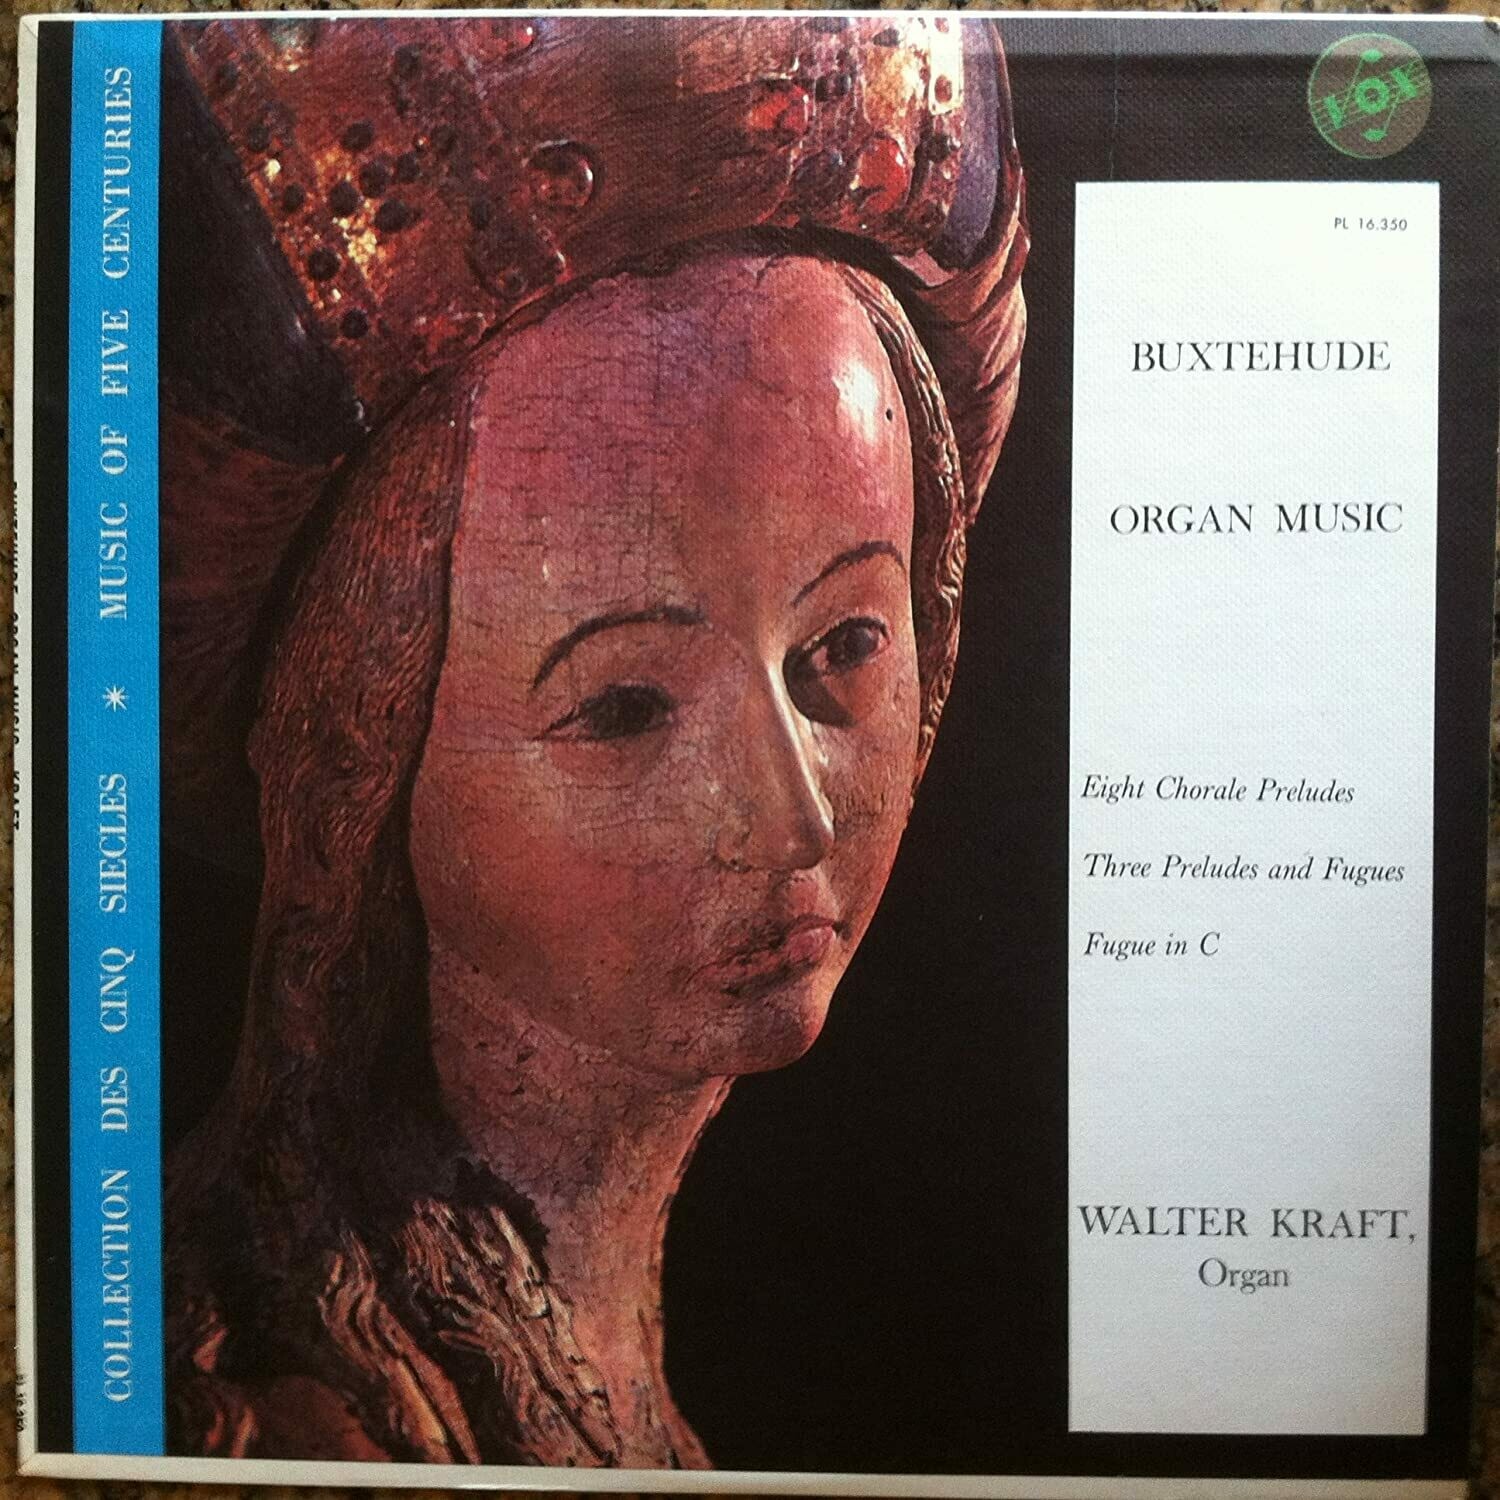 Walter Kraft "Buxtehude Organ Music" EX+ 1965